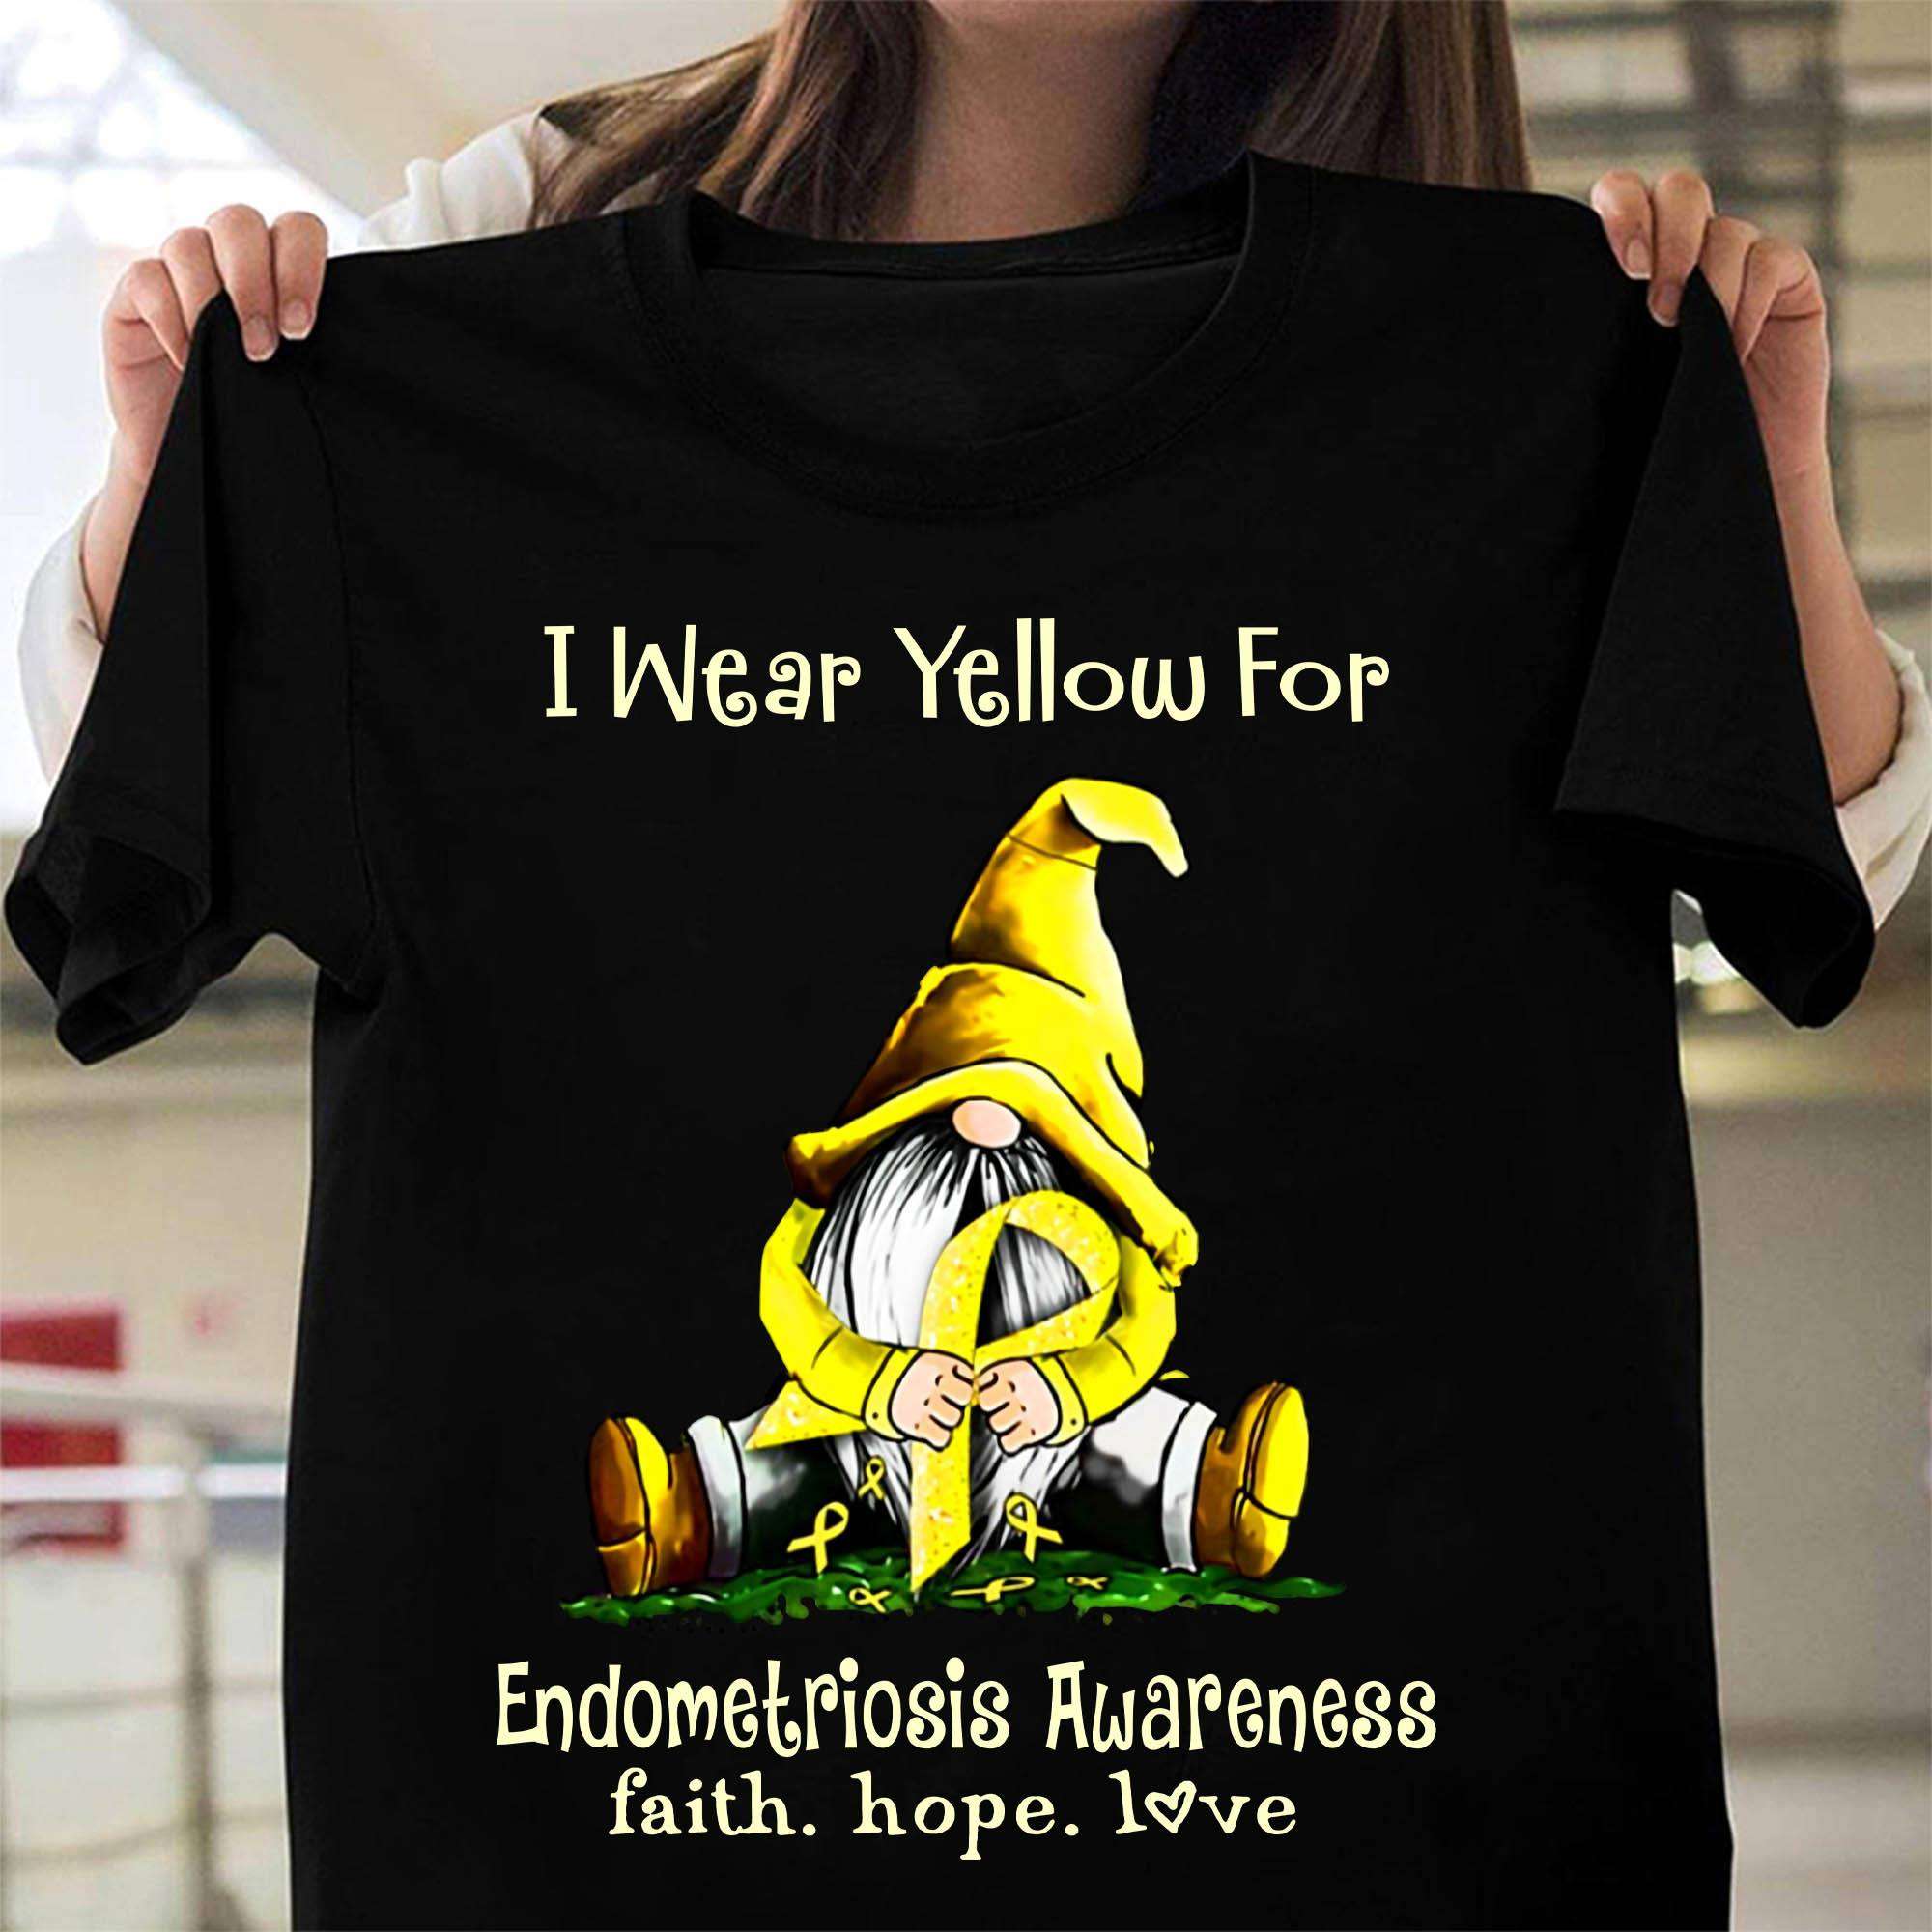 I wear yellow for Endometriosis awareness - Faith hope love, garden gnome